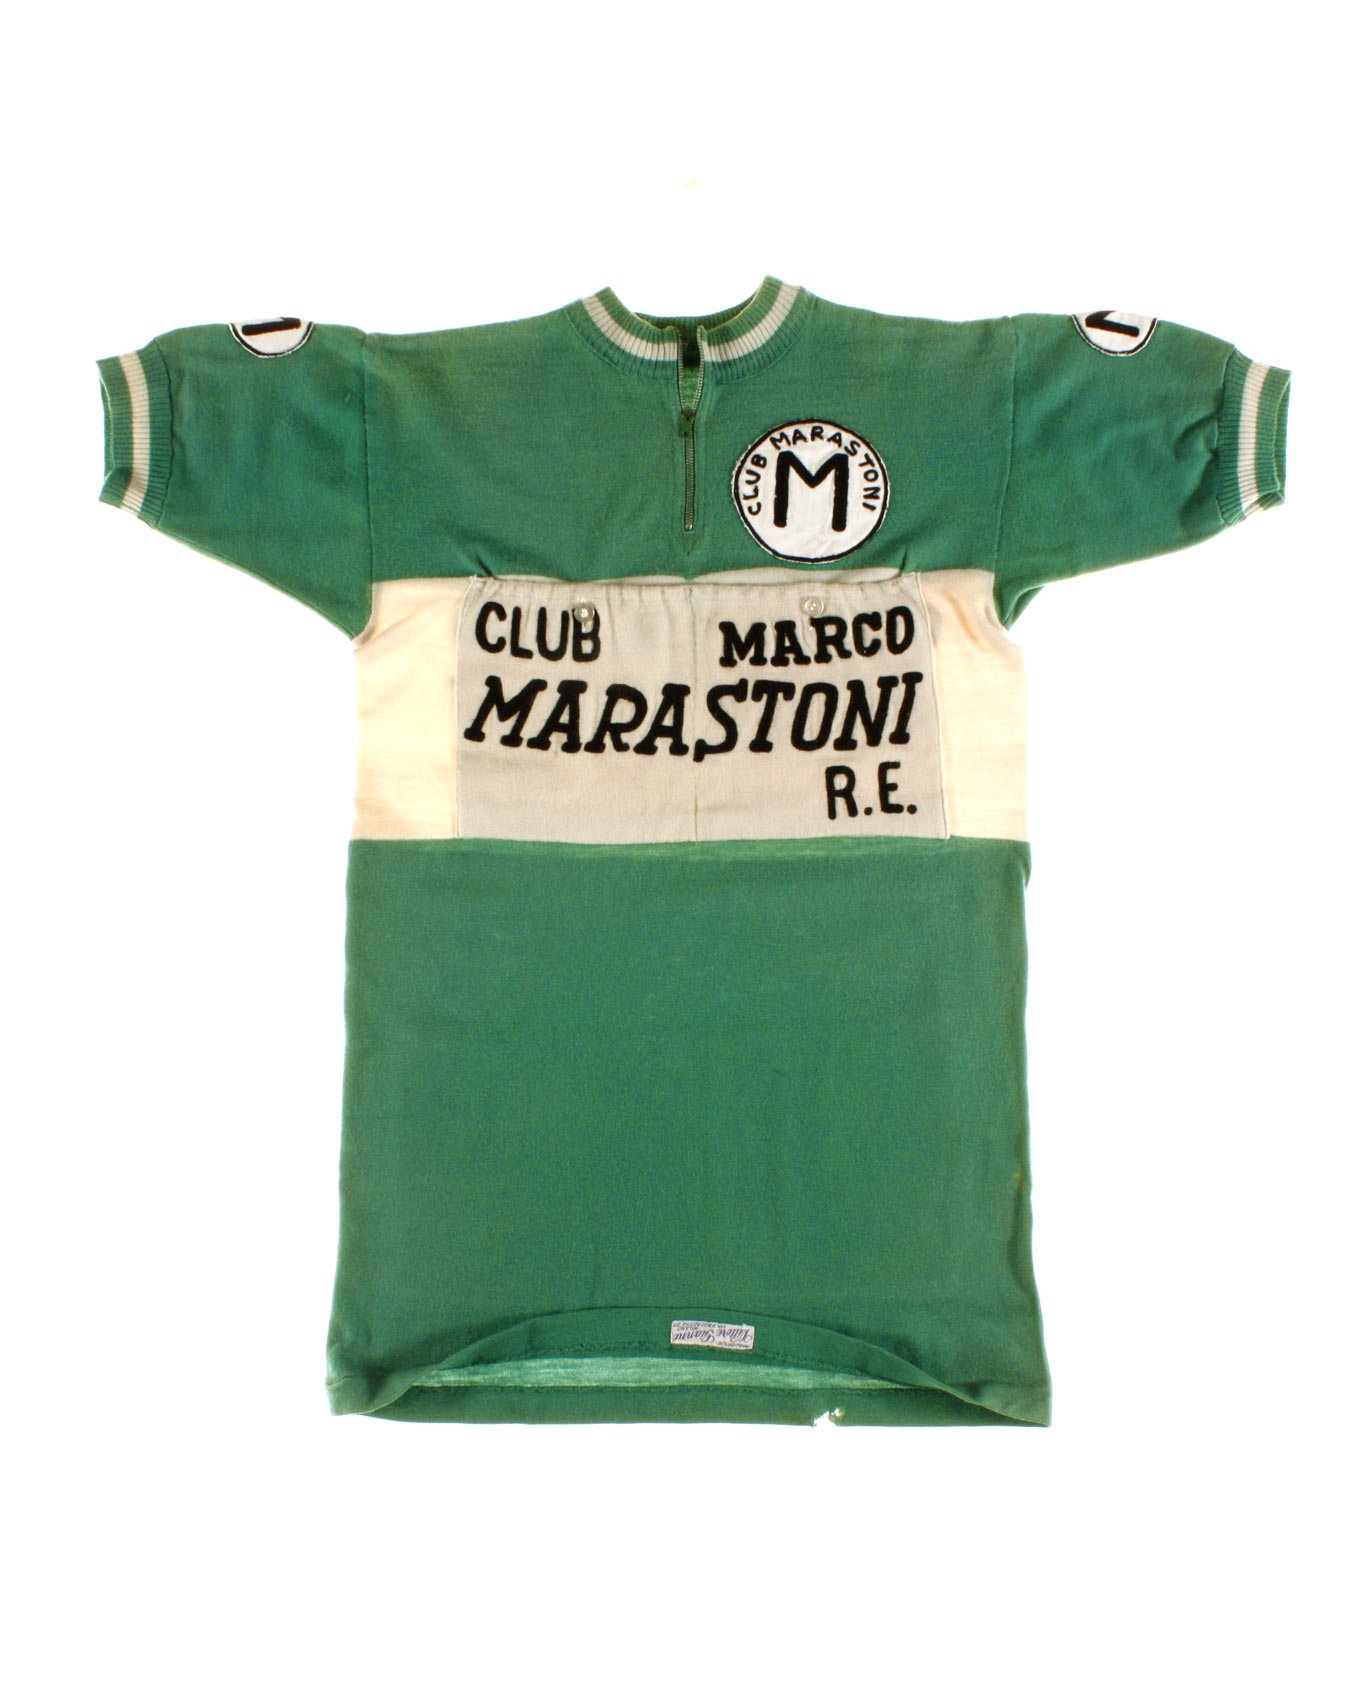 Club Marastoni Cycling wool Rare t-shirt 50s